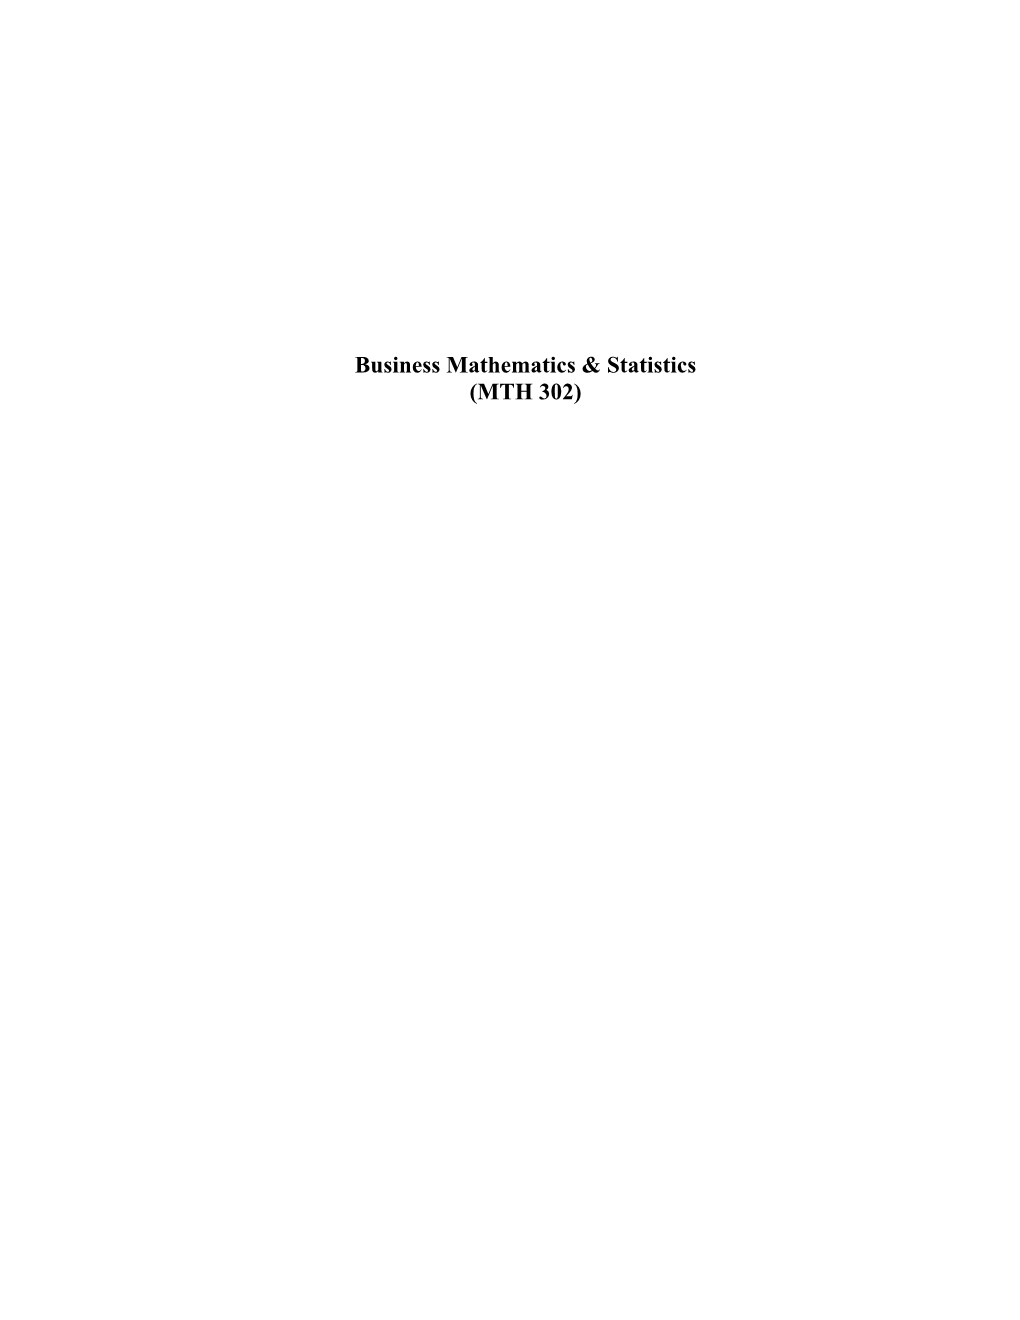 Business Mathematics & Statistics (MTH 302)